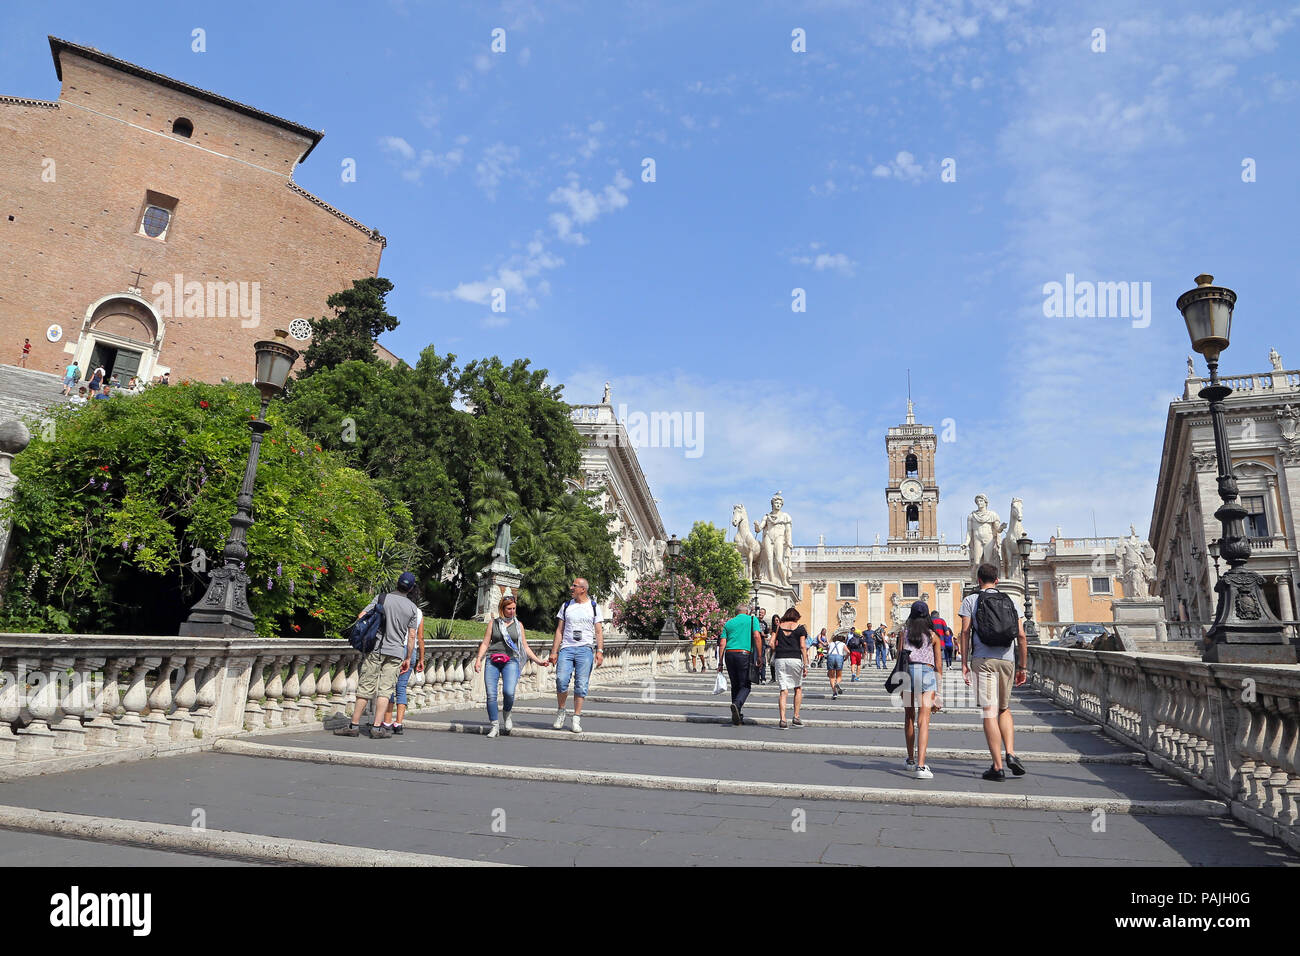 ROME, ITALY - JUNE 11, 2016: The 'Cordonata' access to the Campidoglio square, with statues of Castor and Pollux. Stock Photo